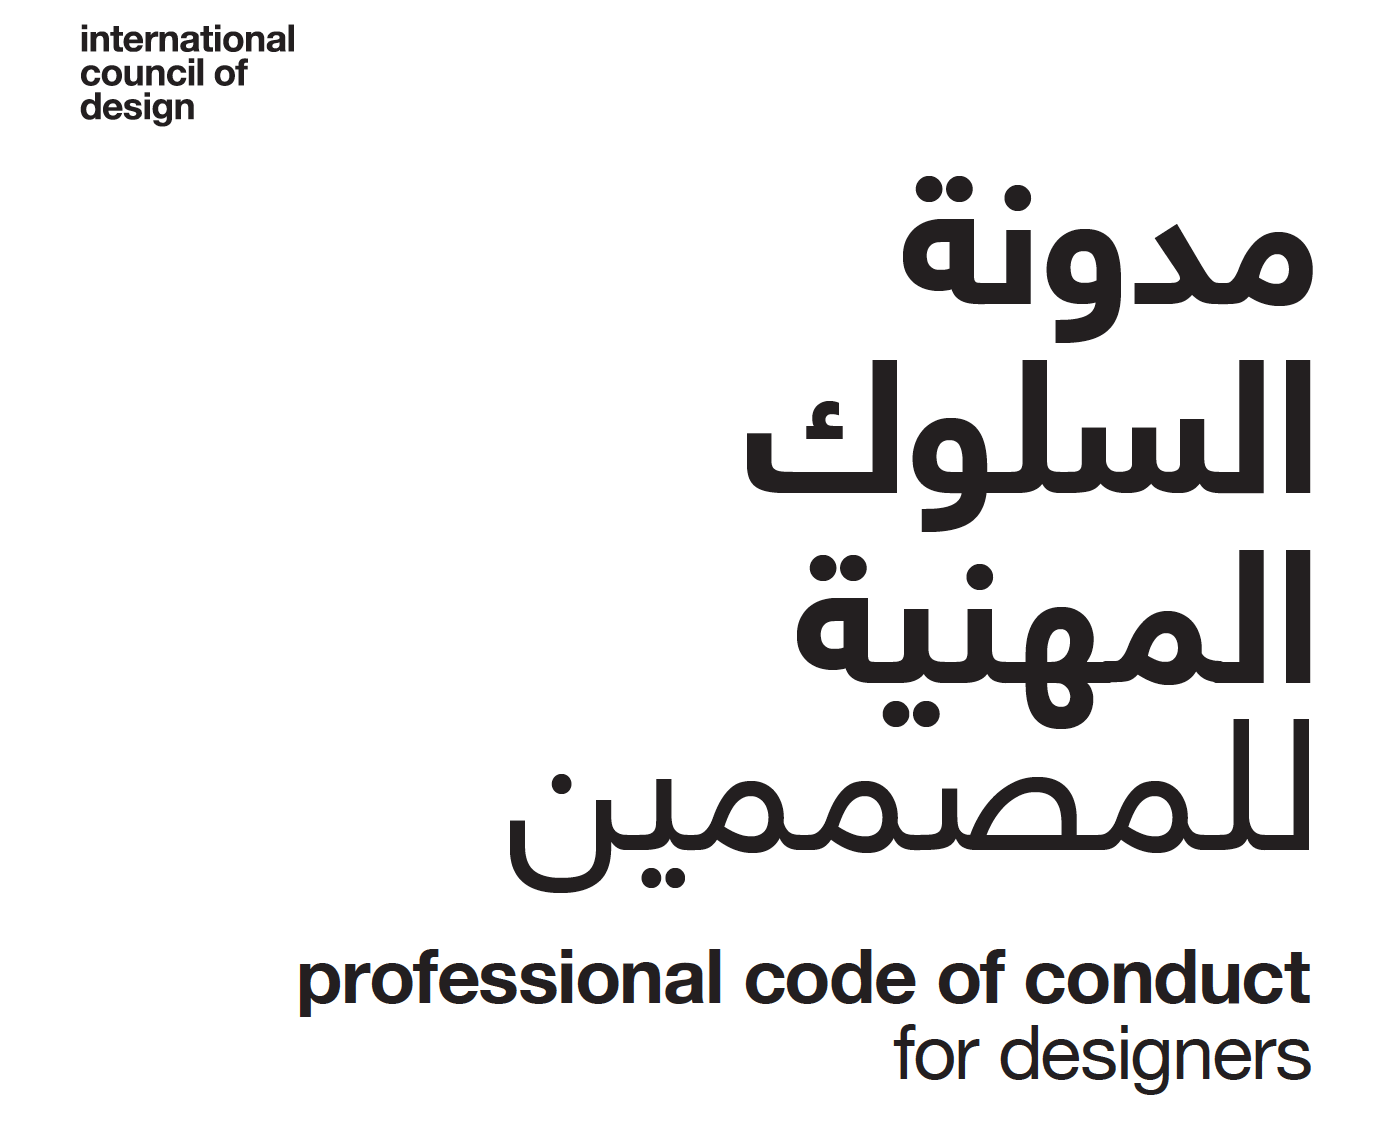 ICoD code of conduct translated to arabic